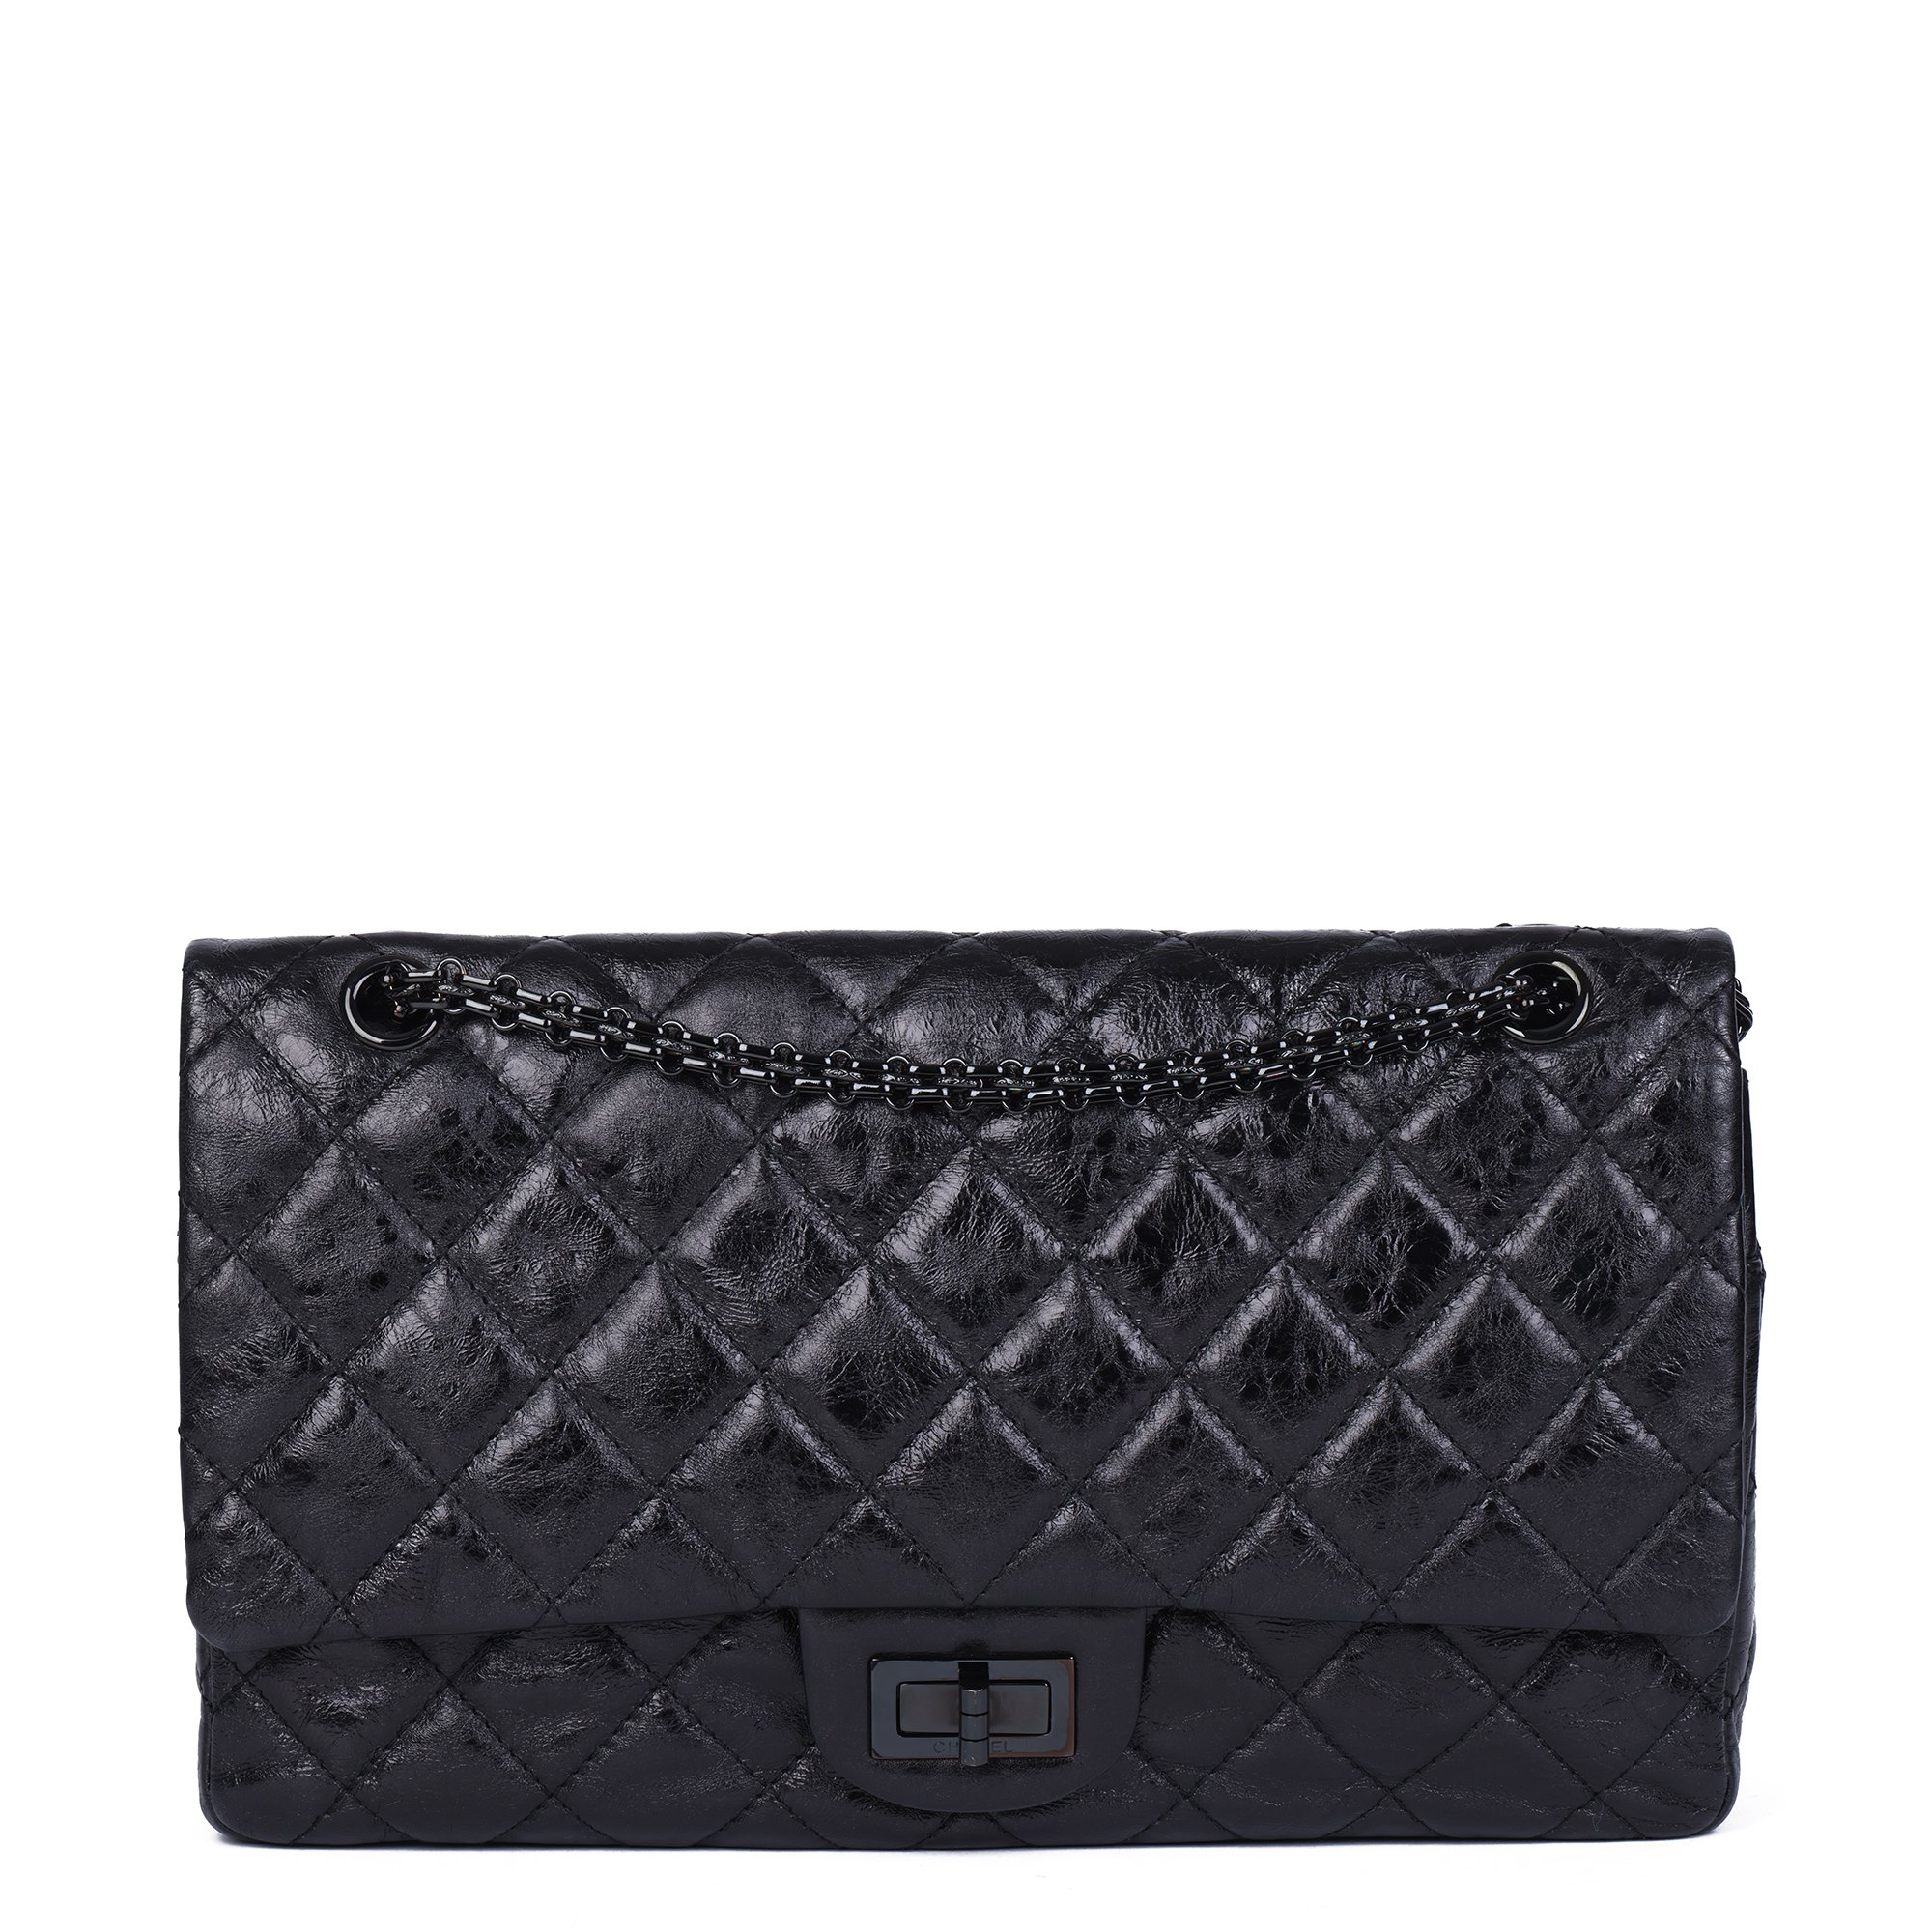 Chanel 2.55 Reissue 227 Double Flap Bag 2008 CB511 | Second Hand Handbags